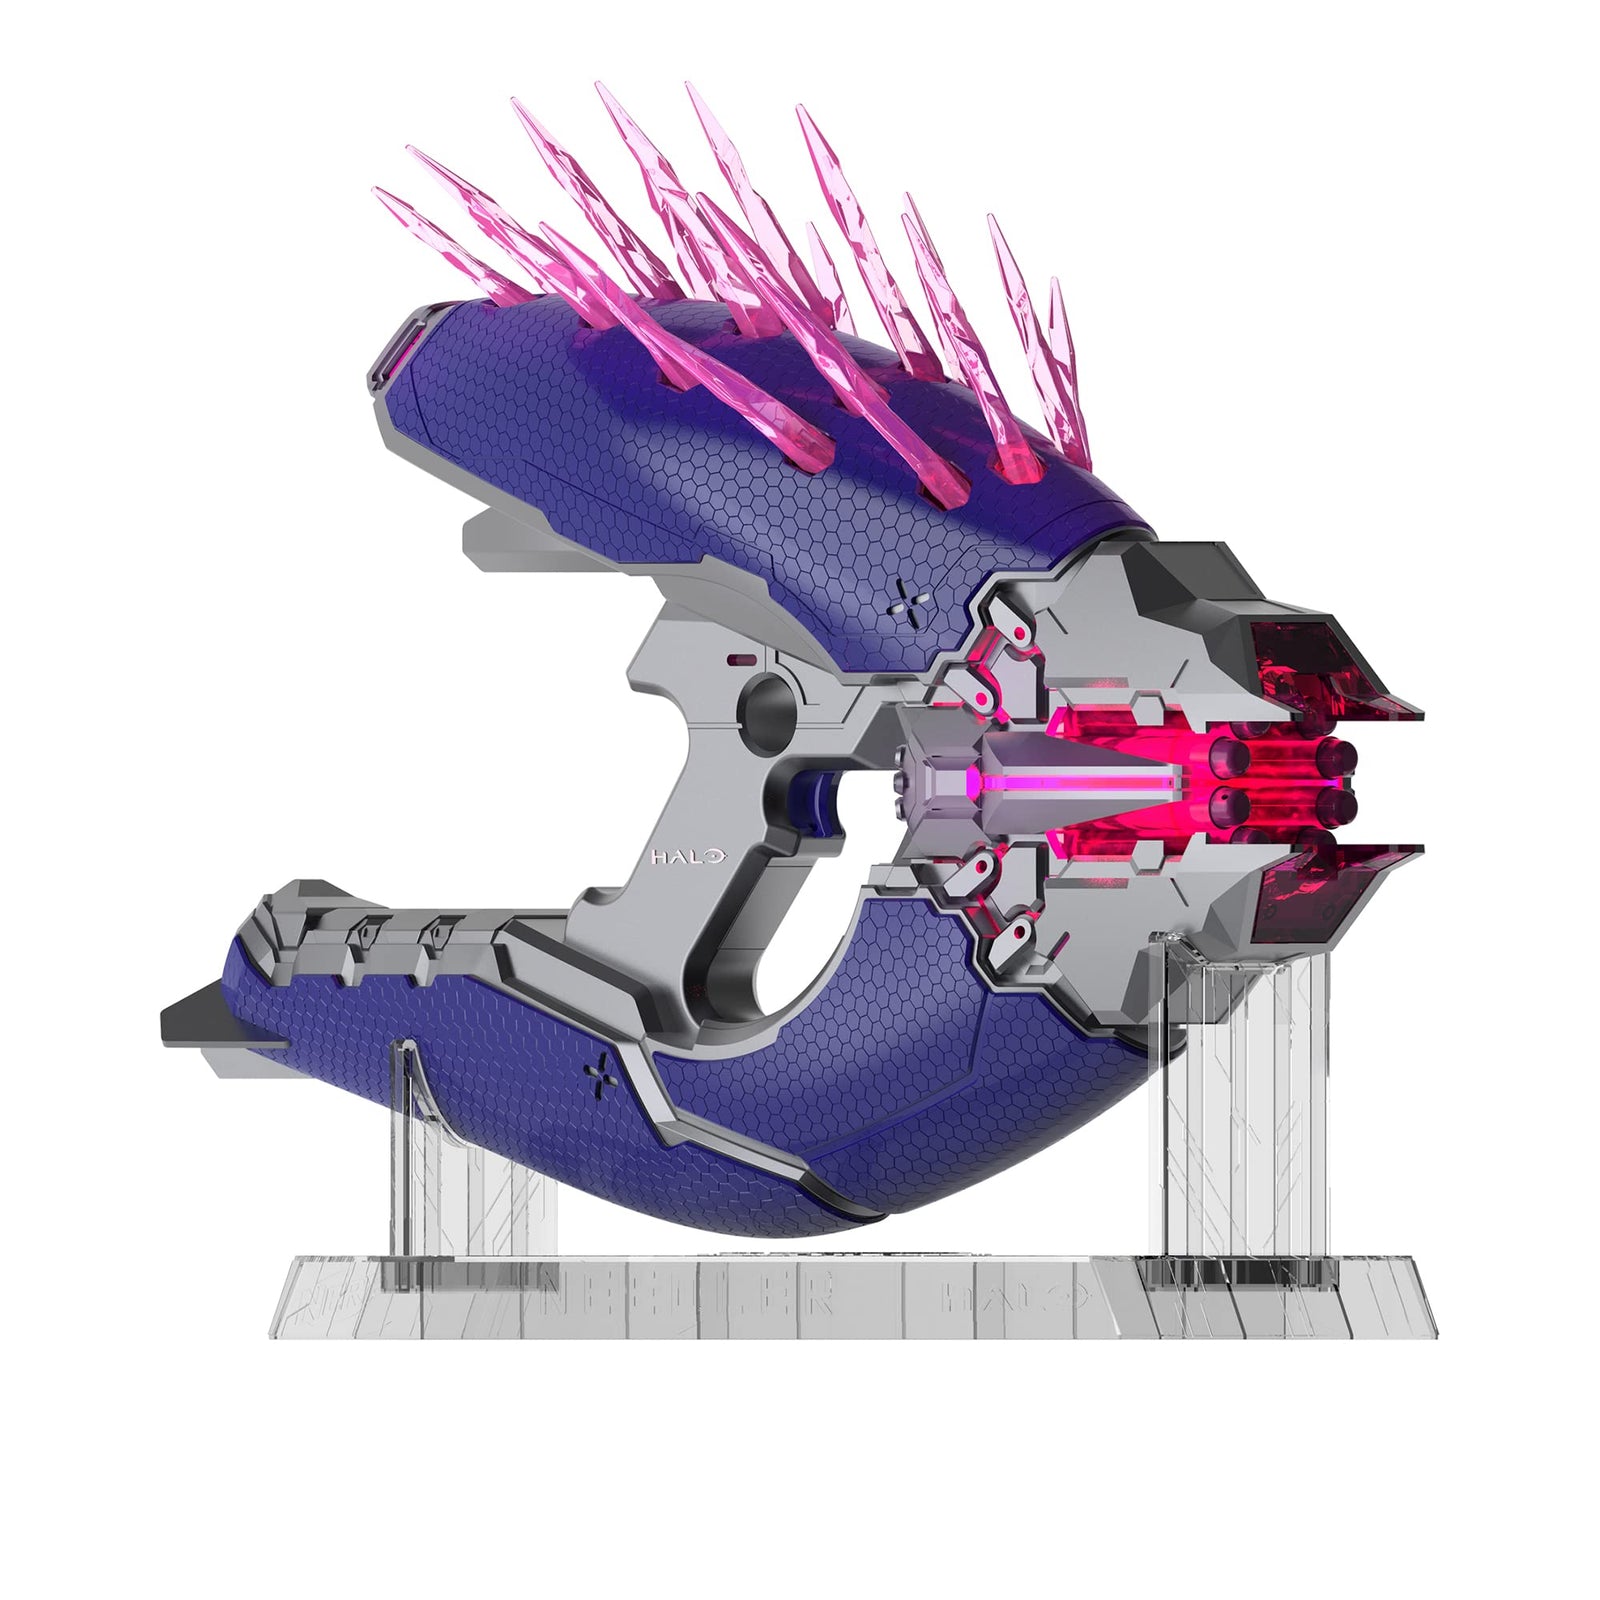 NERF LMTD Halo Needler Dart-Firing Blaster, Light-Up Needles, 10-Dart Rotating Drum, 10 Elite Darts, Game Card with in-Game Content